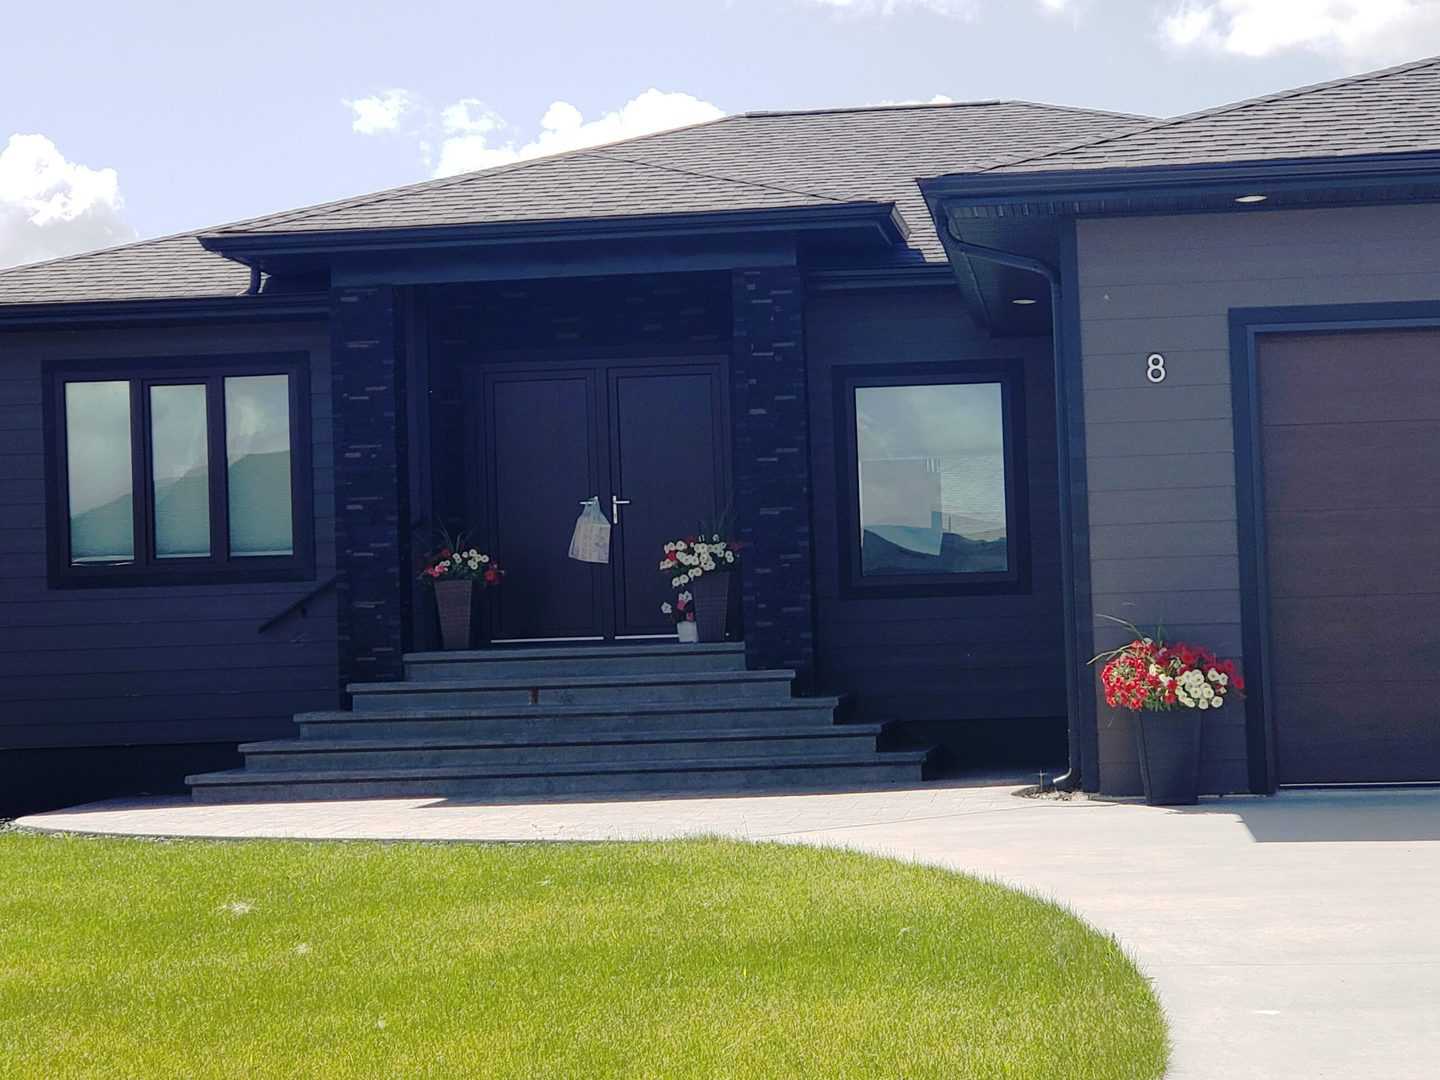 Black tilt and turn windows in a dark grey house